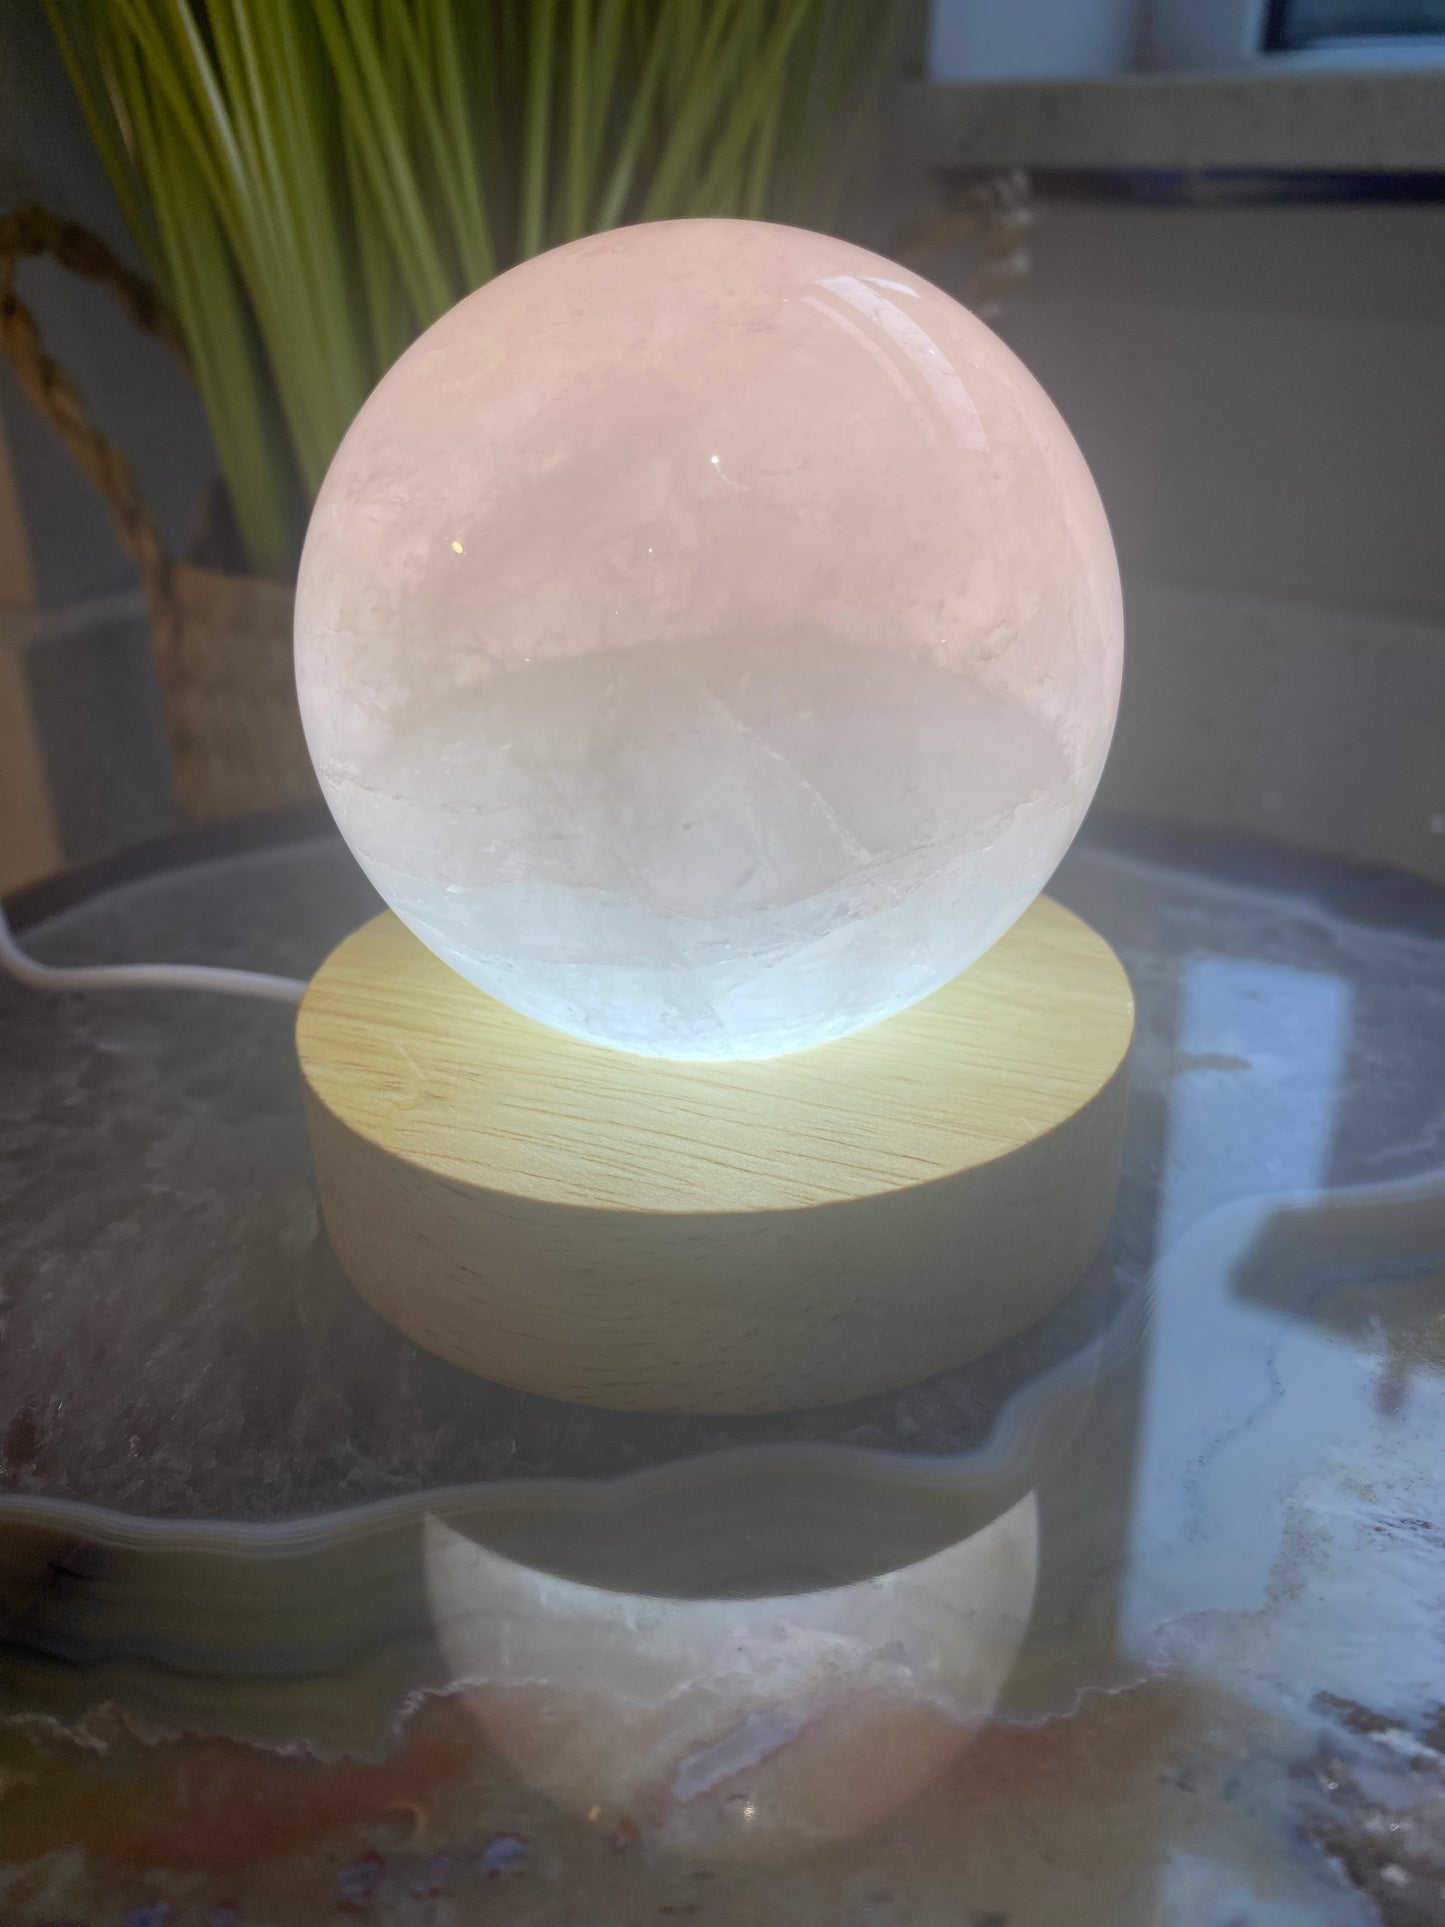 Rose quartz sphere on light up stand